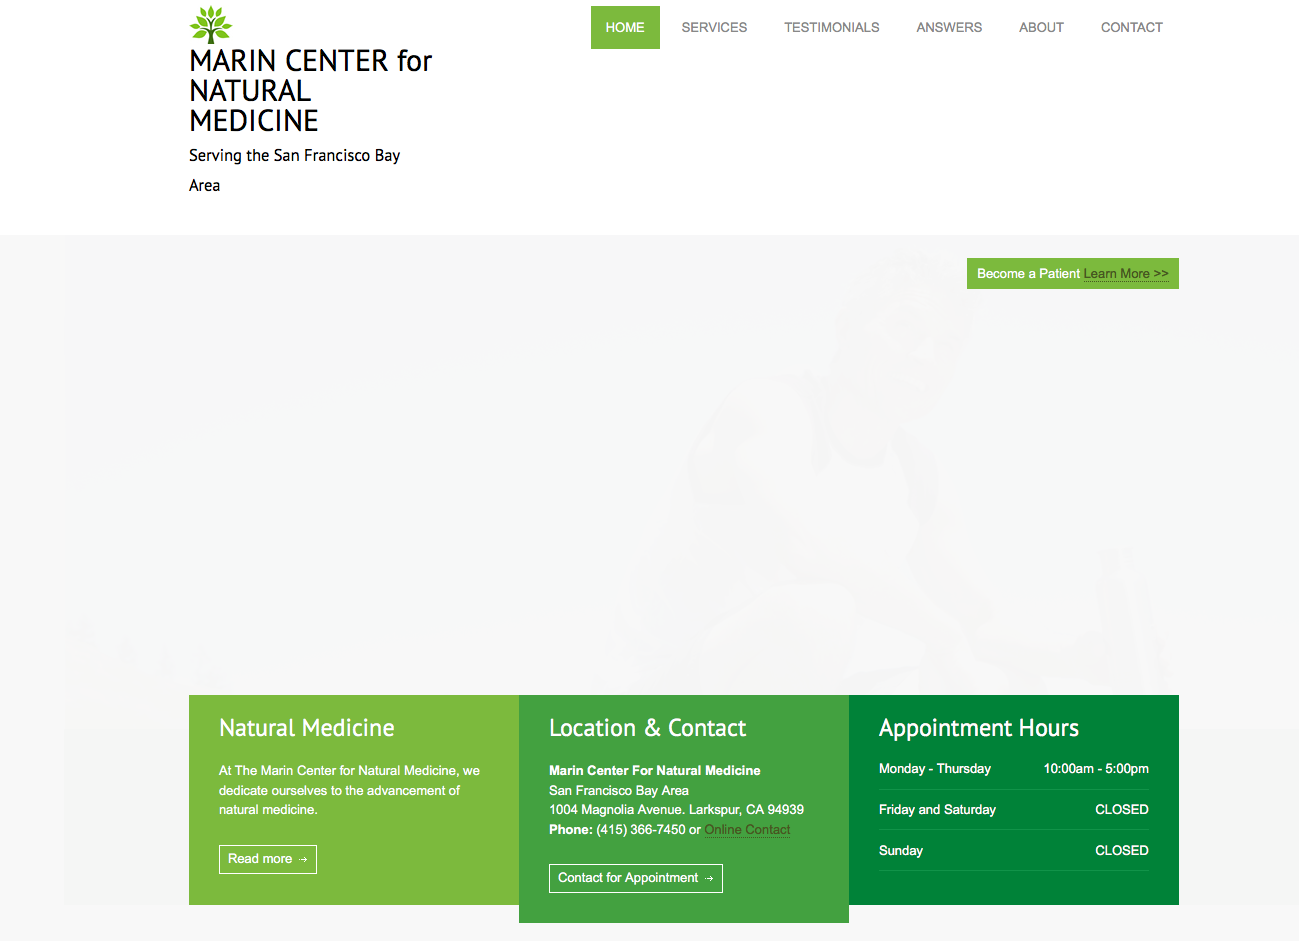 Marin Center for Natural Medicine